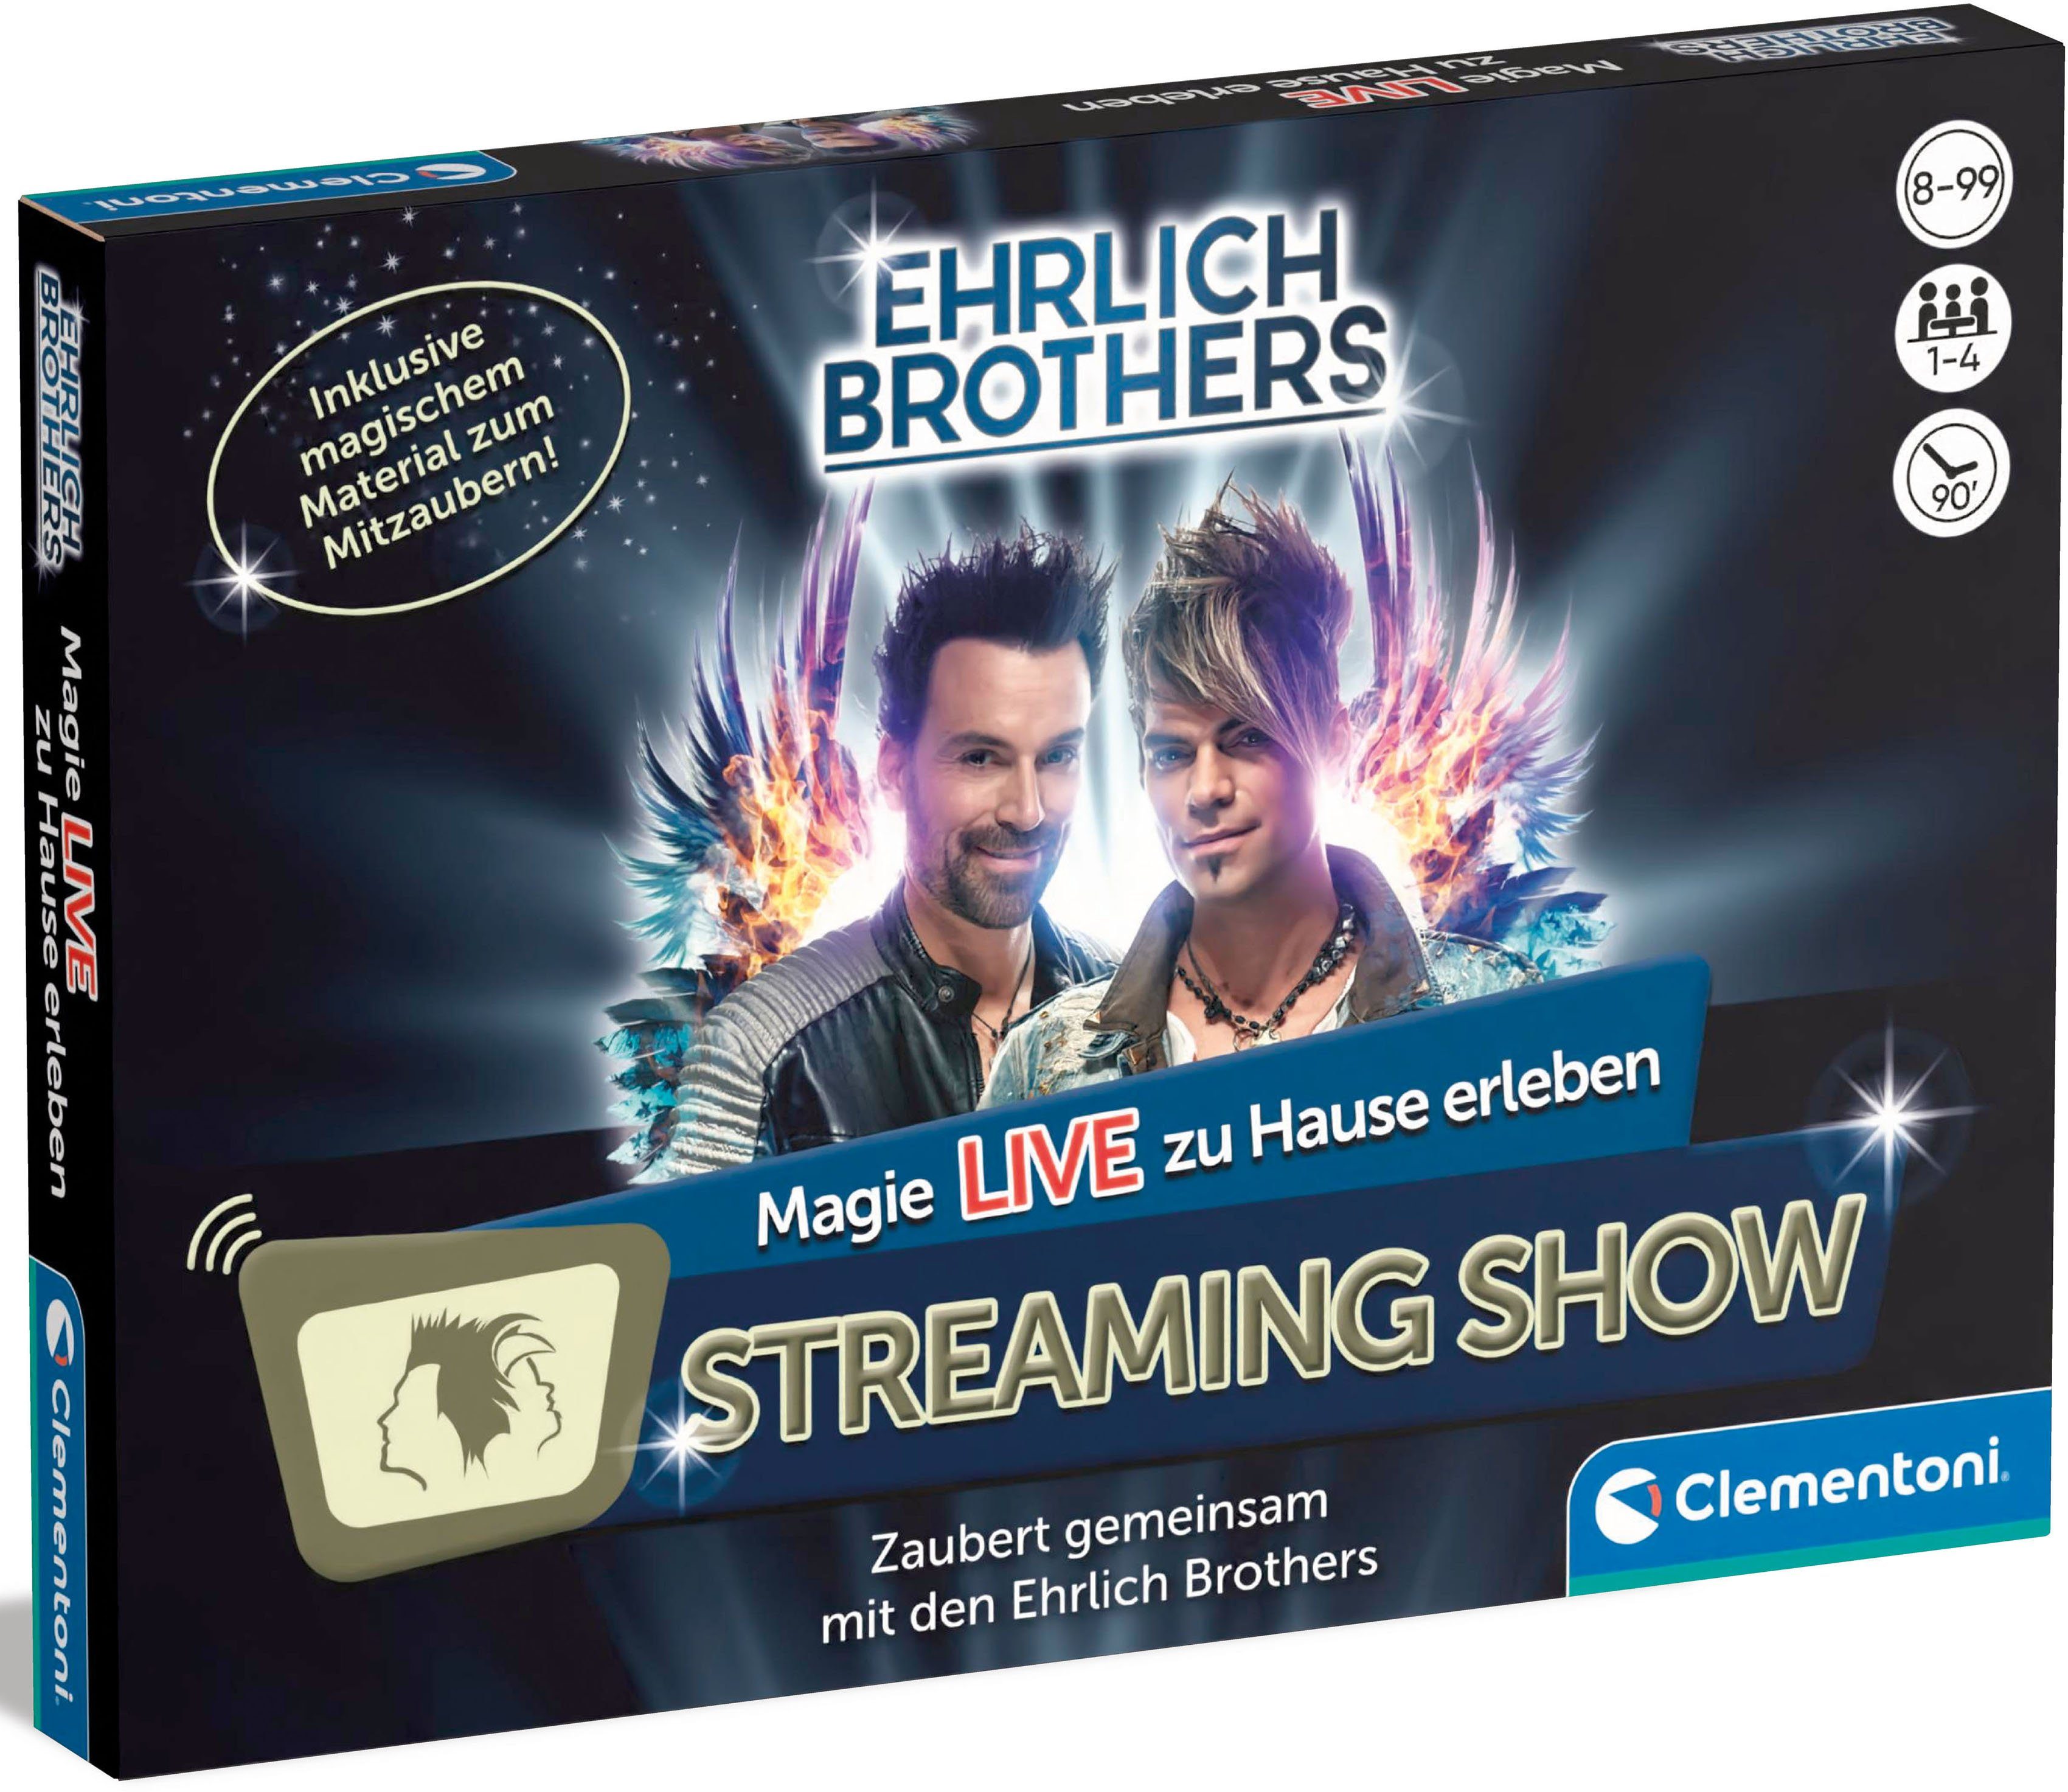 Ehrlich Zauberkasten Show, Europe Brothers, Made Streaming Vedes Clementoni® in